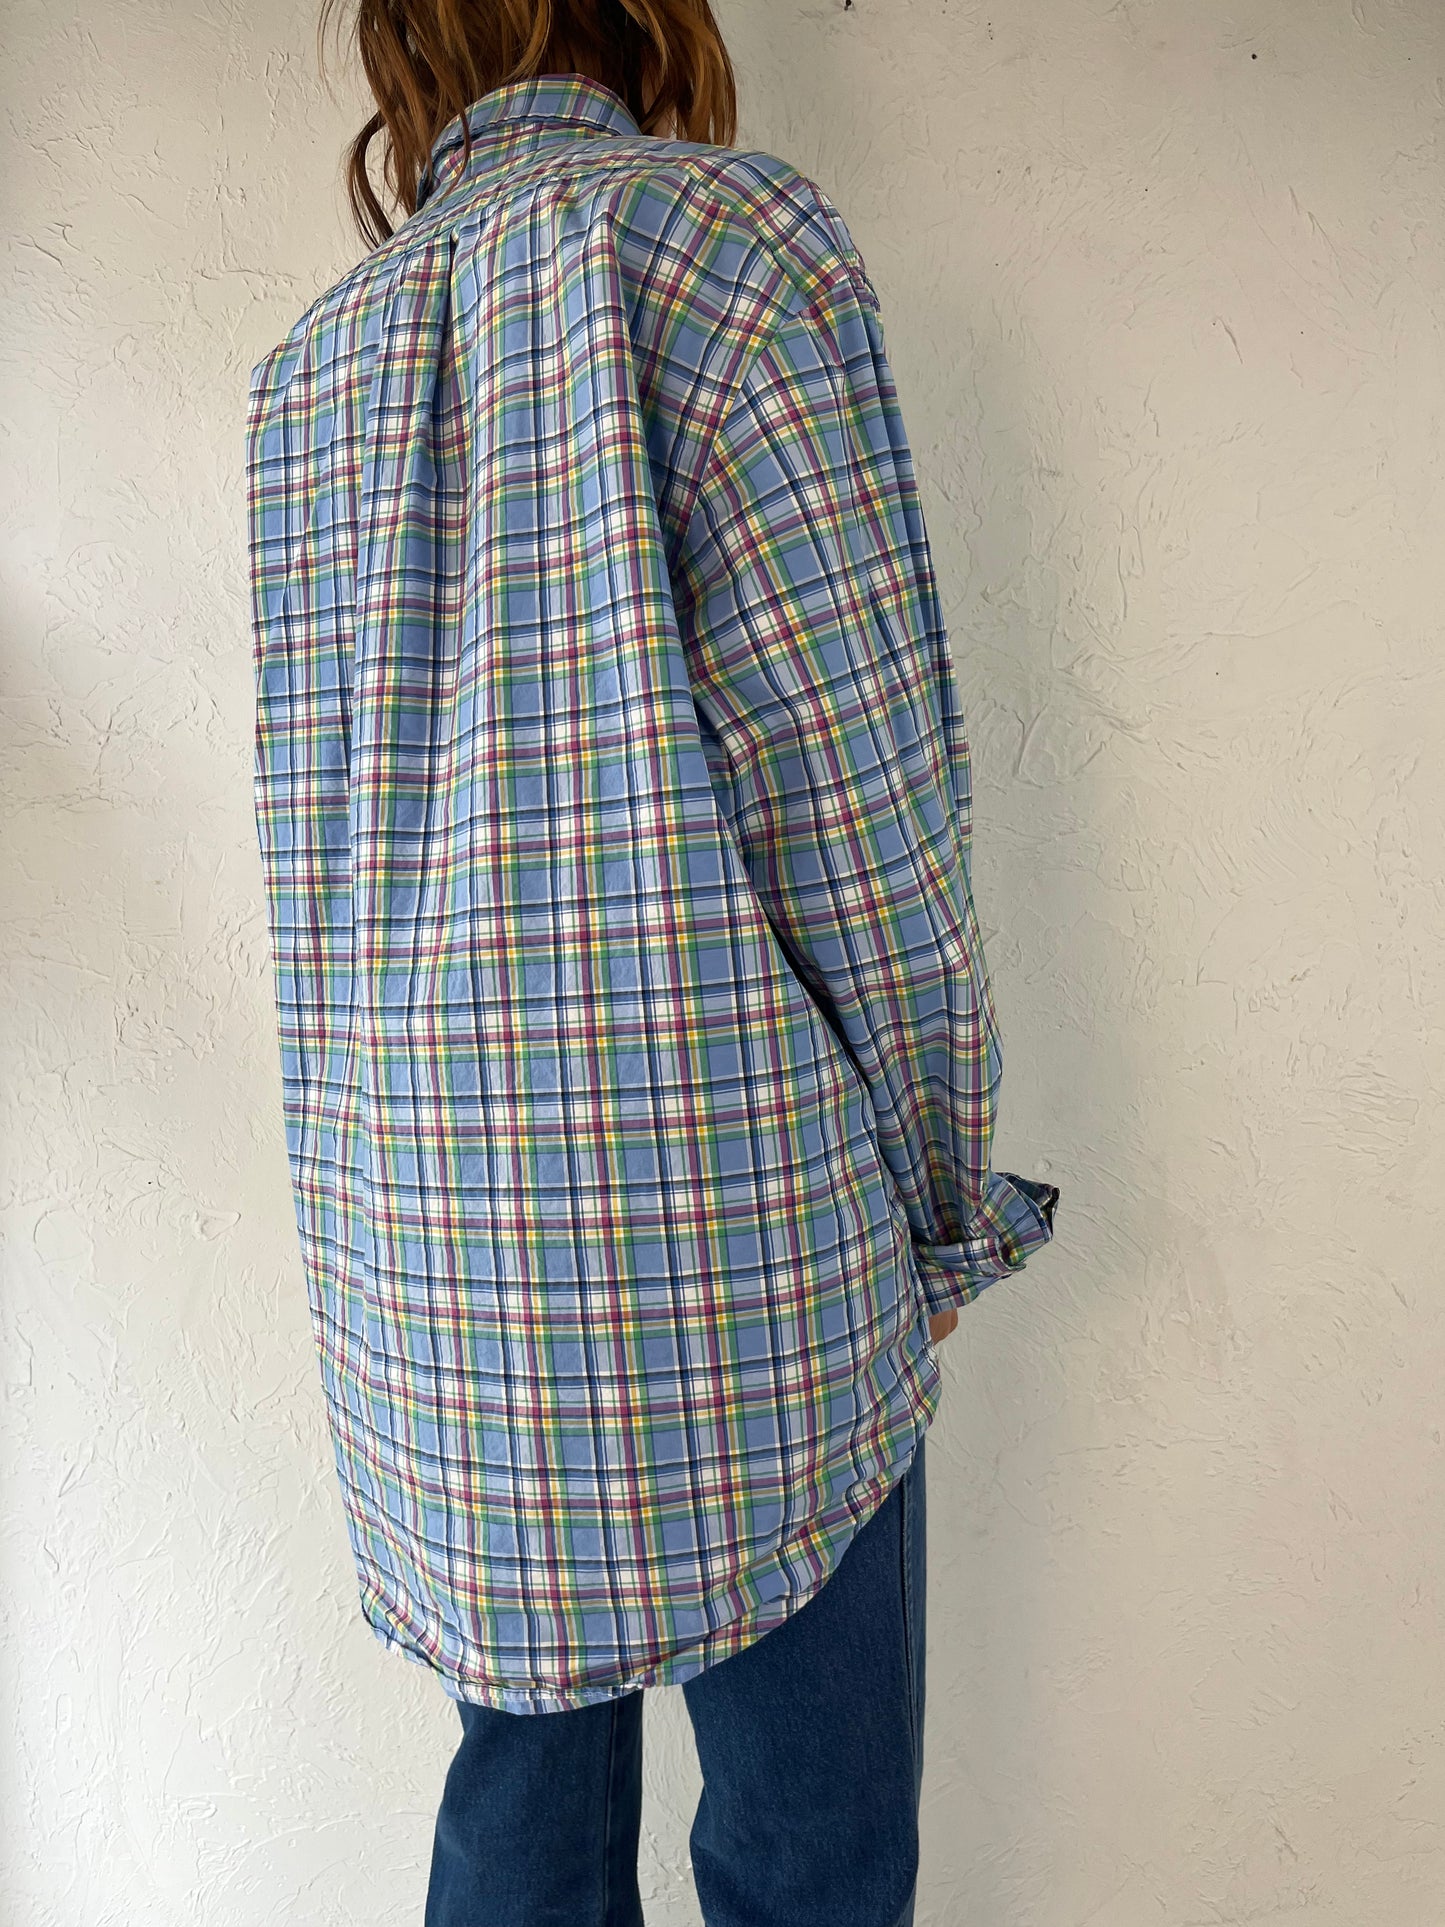 Y2k 'Ralph Lauren' Blue Plaid Button Up Shirt / XL